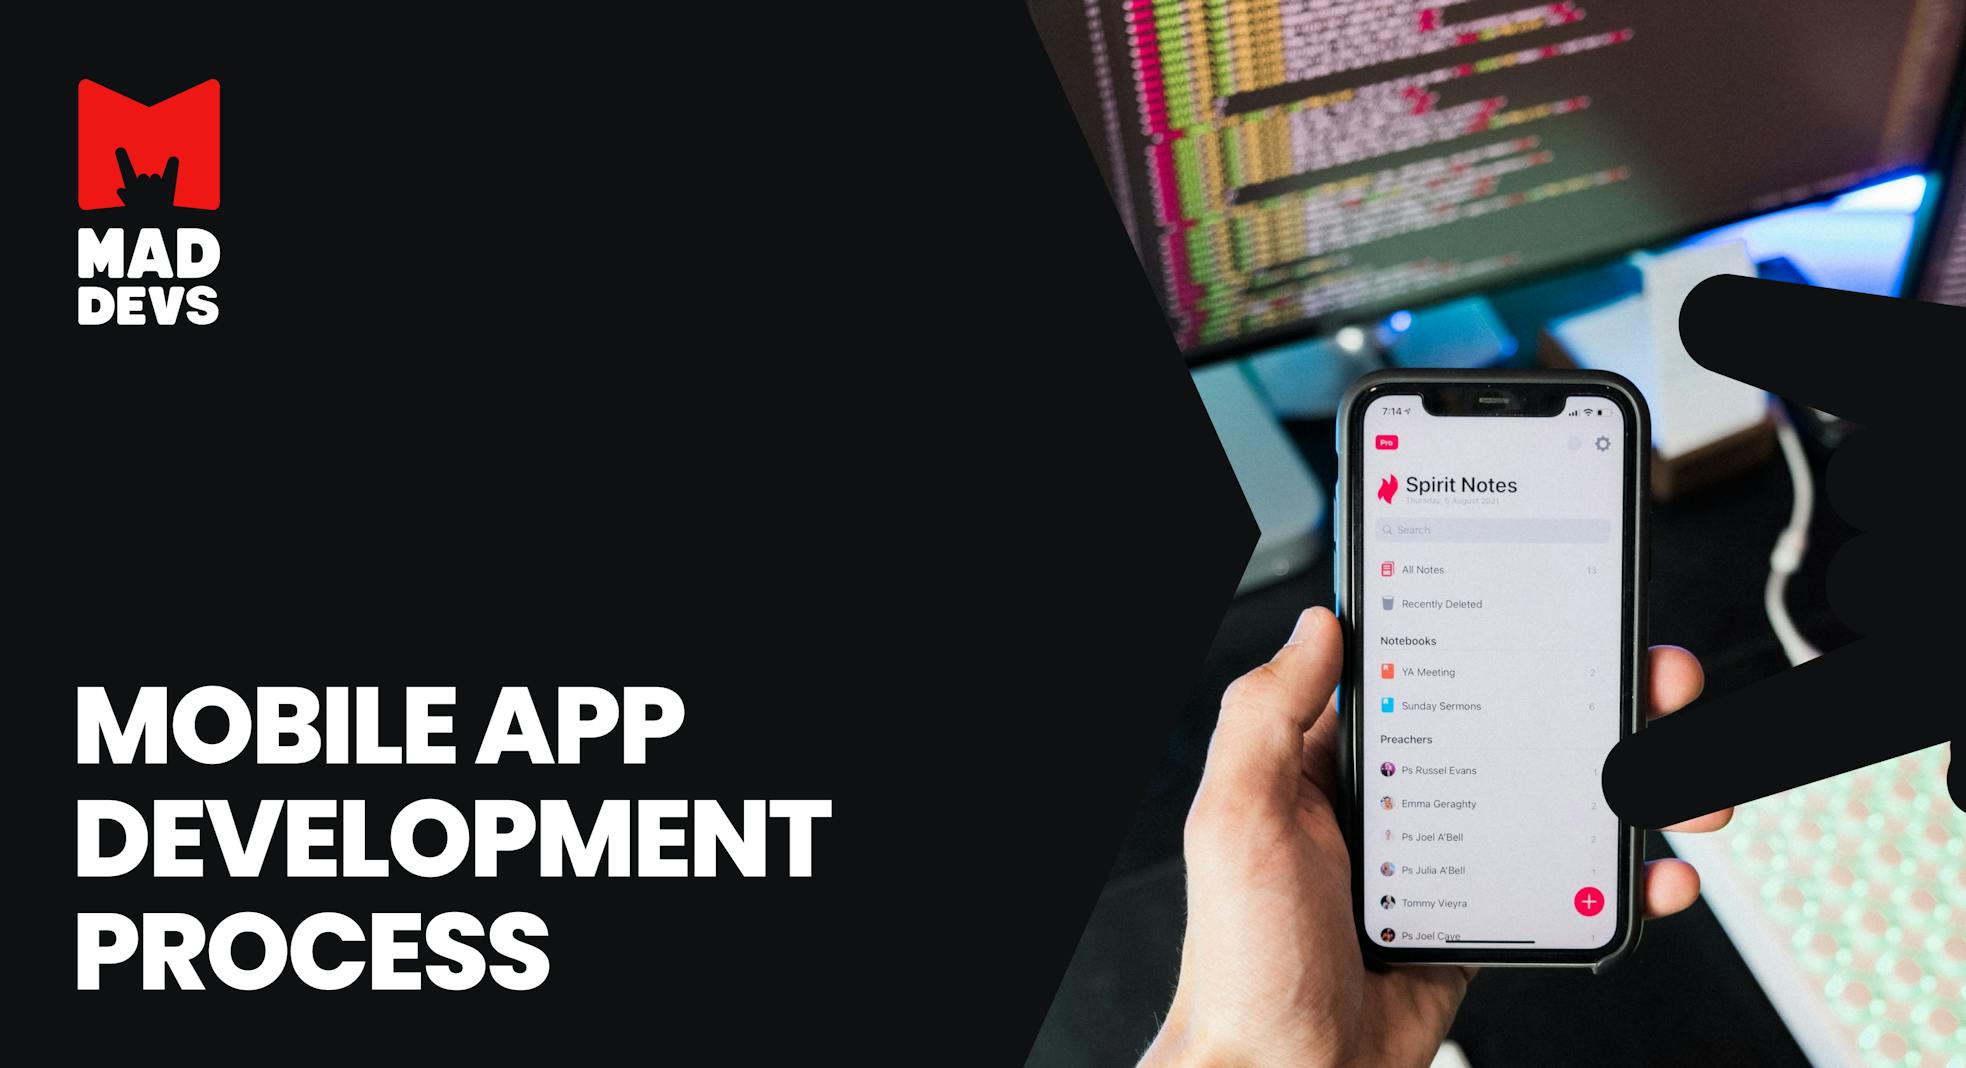 Mobile App Development Process: 7 Steps to Build an App